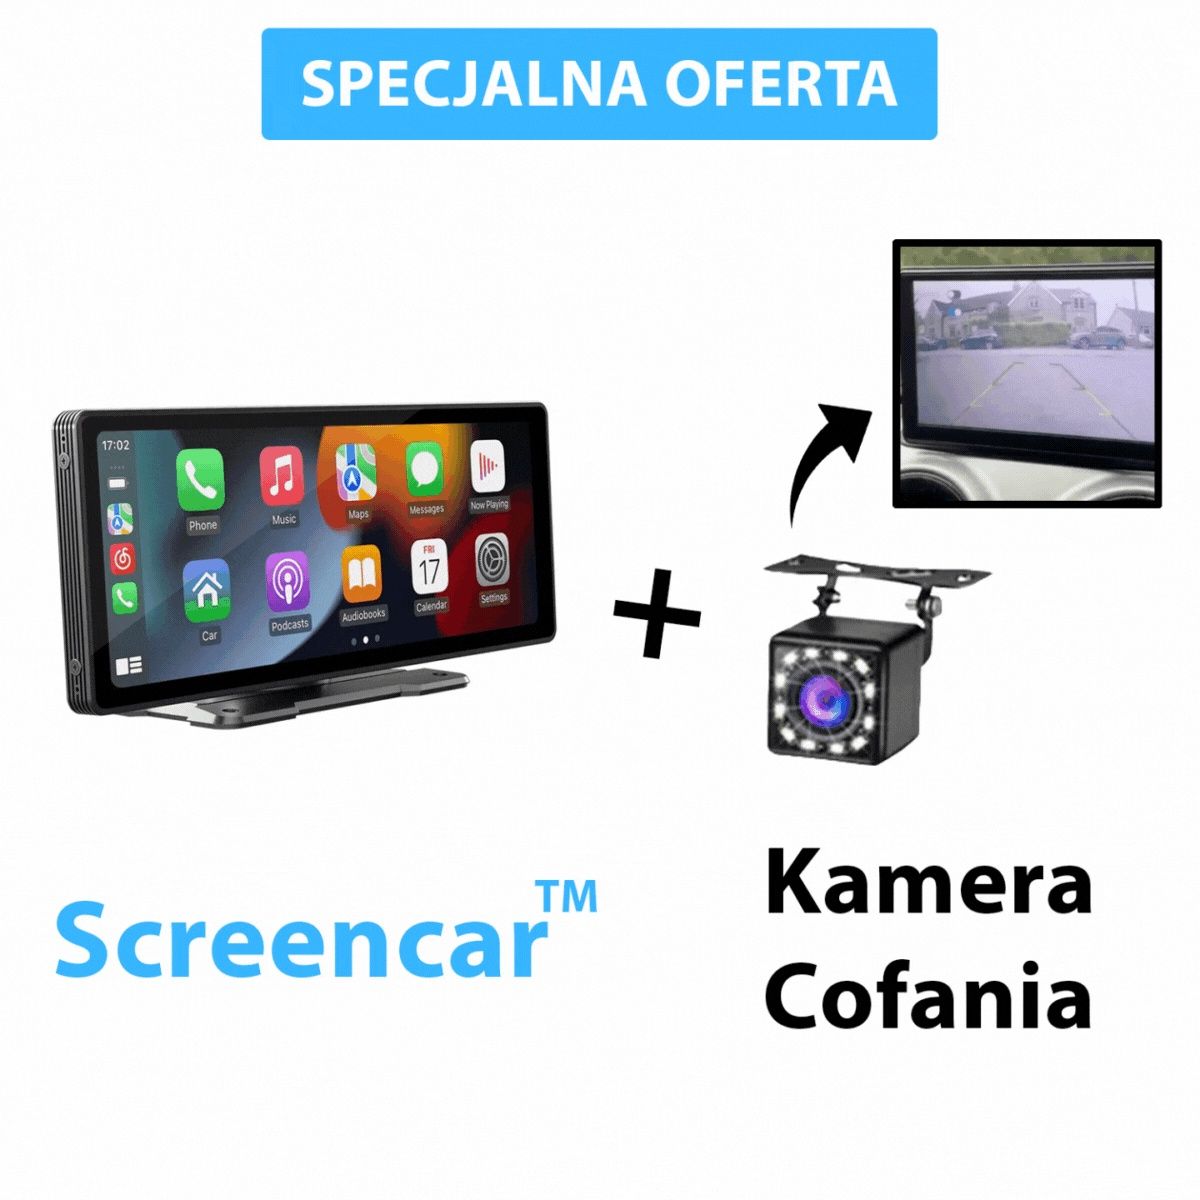 Screencar™ - Ekran Multimedialny + Kamera cofania